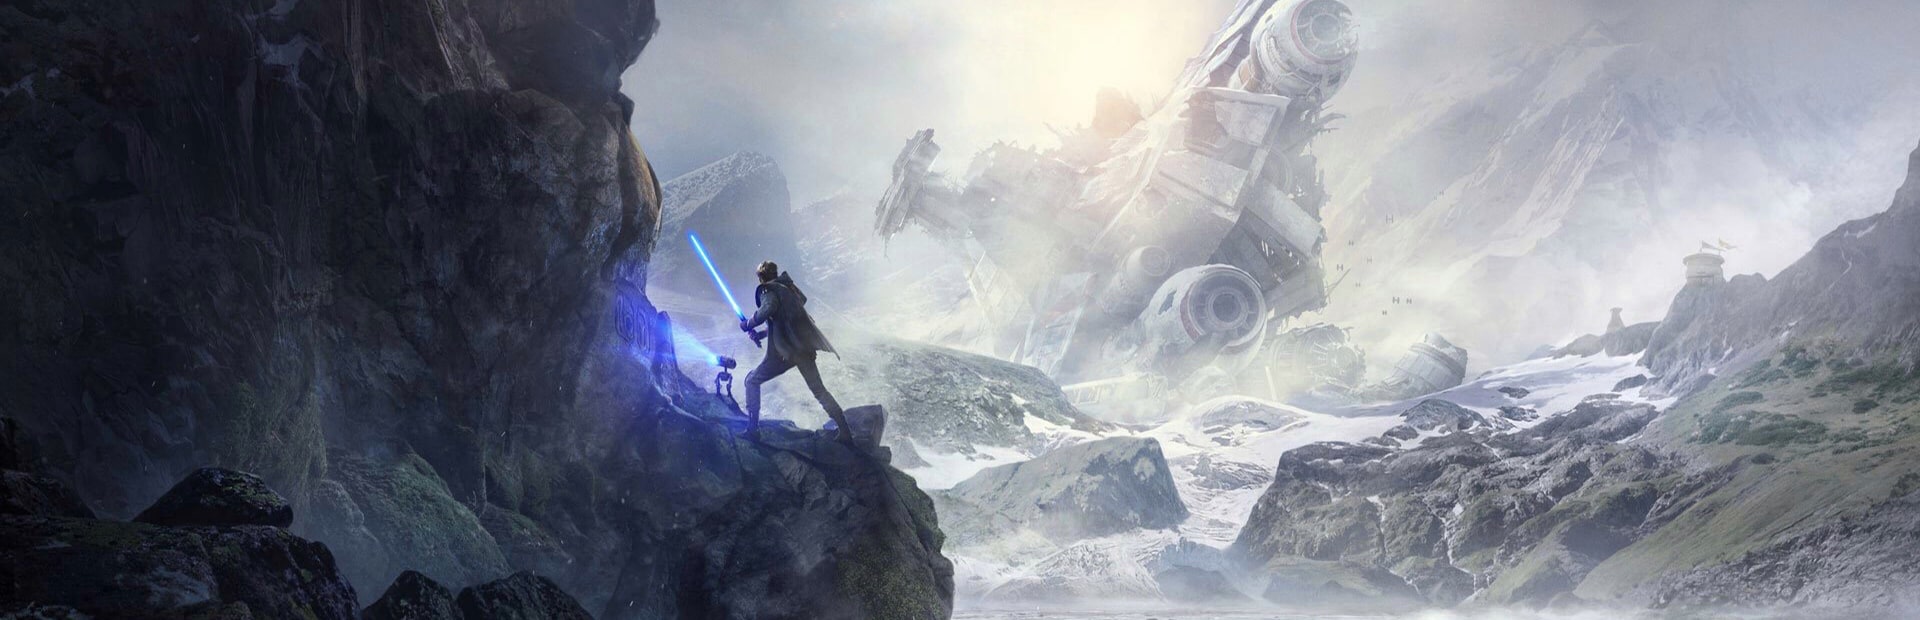 Star Wars Jedi: Fallen Order for Xbox One